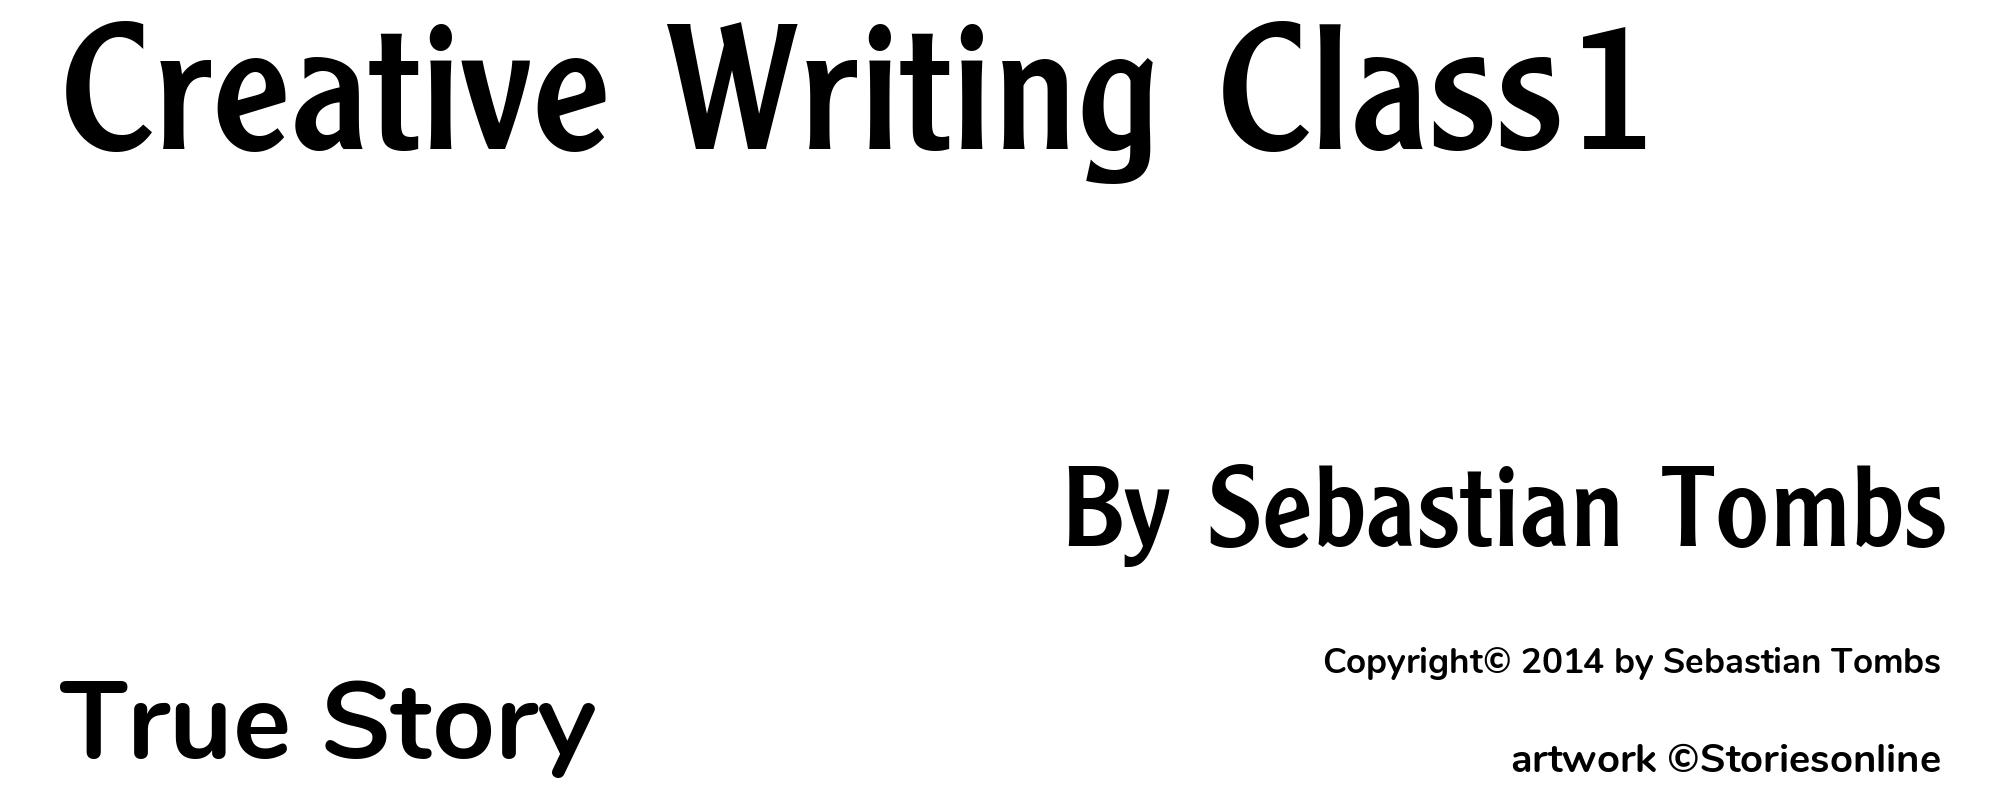 Creative Writing Class1 - Cover